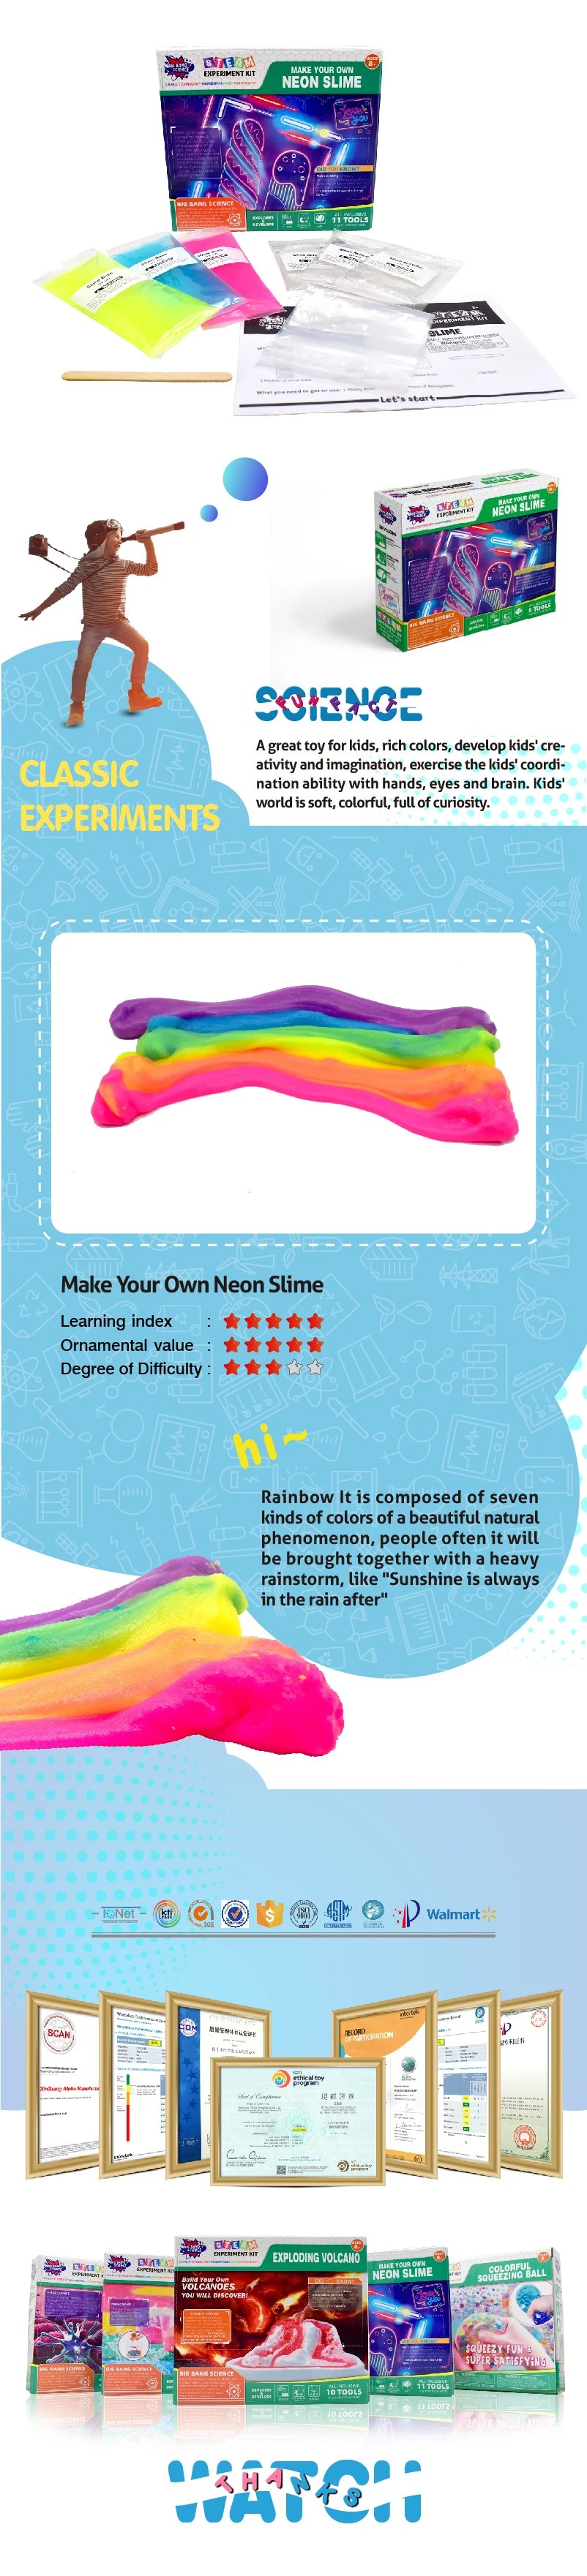 Make Your Own Neon Slime Non-Sticky DIY Slime Kit for Kids